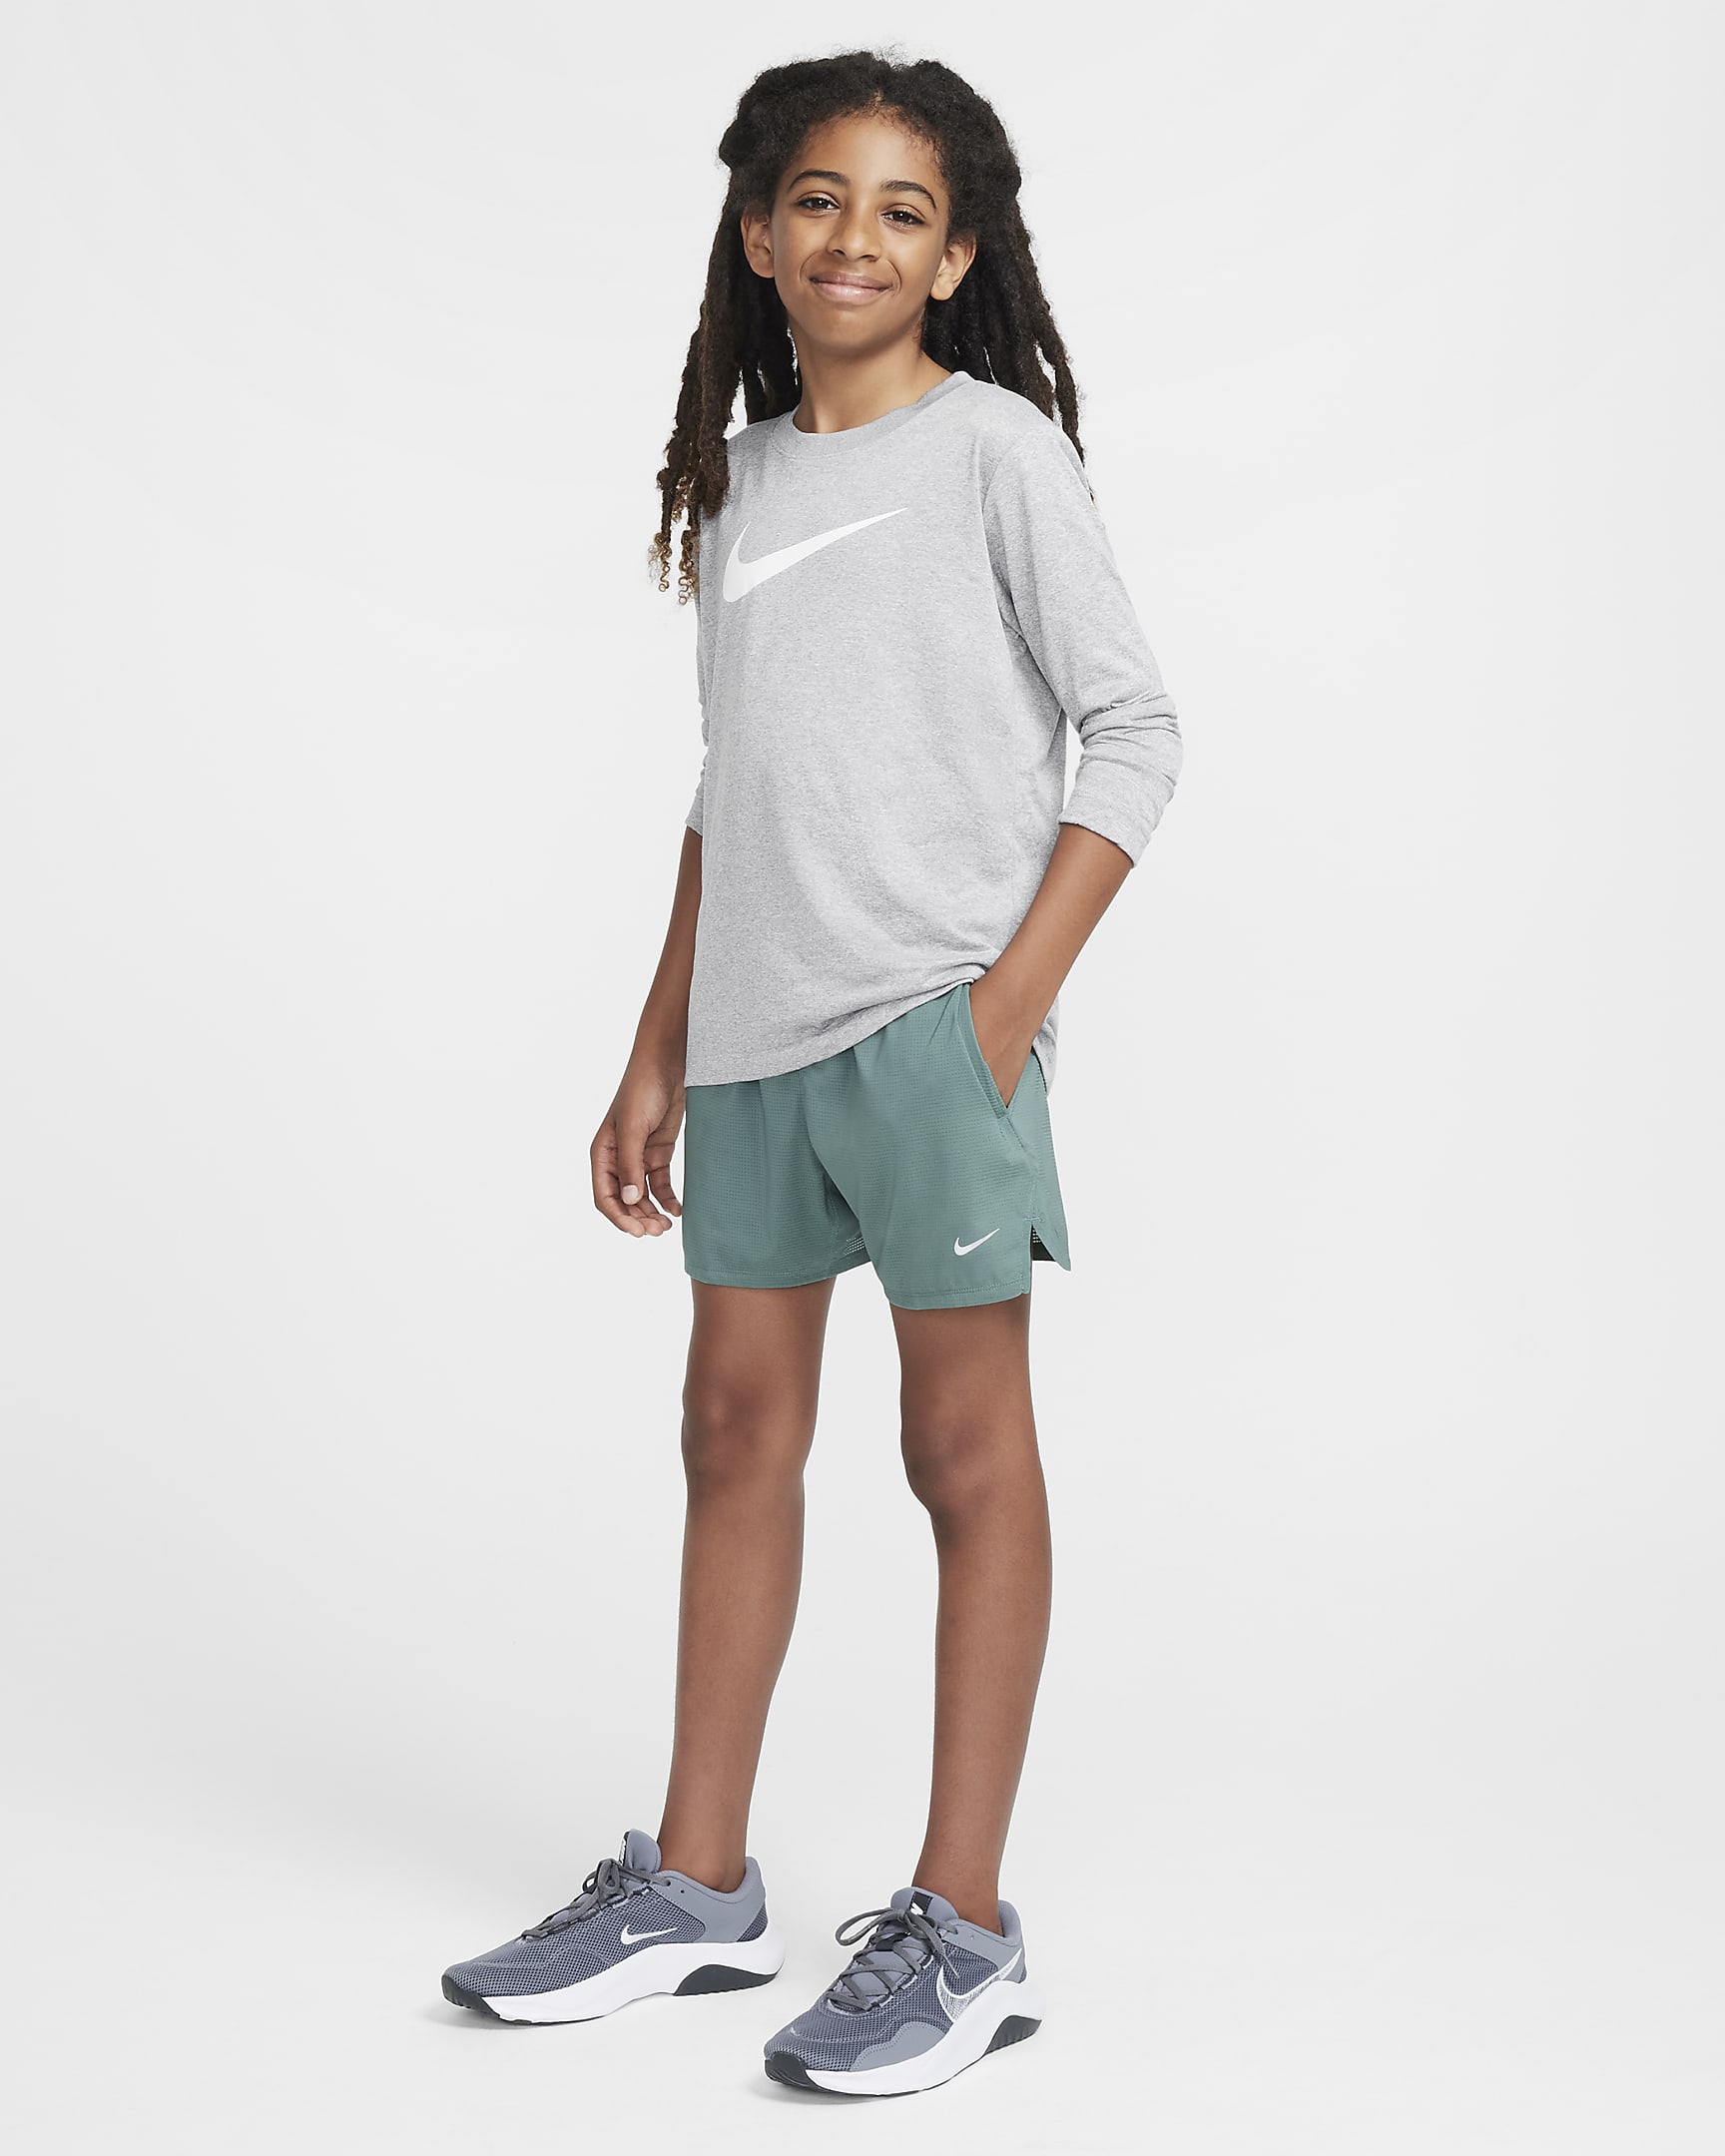 Nike Multi Tech Older Kids' (Boys') Dri-FIT ADV Training Shorts - Bicoastal/Vintage Green/Black